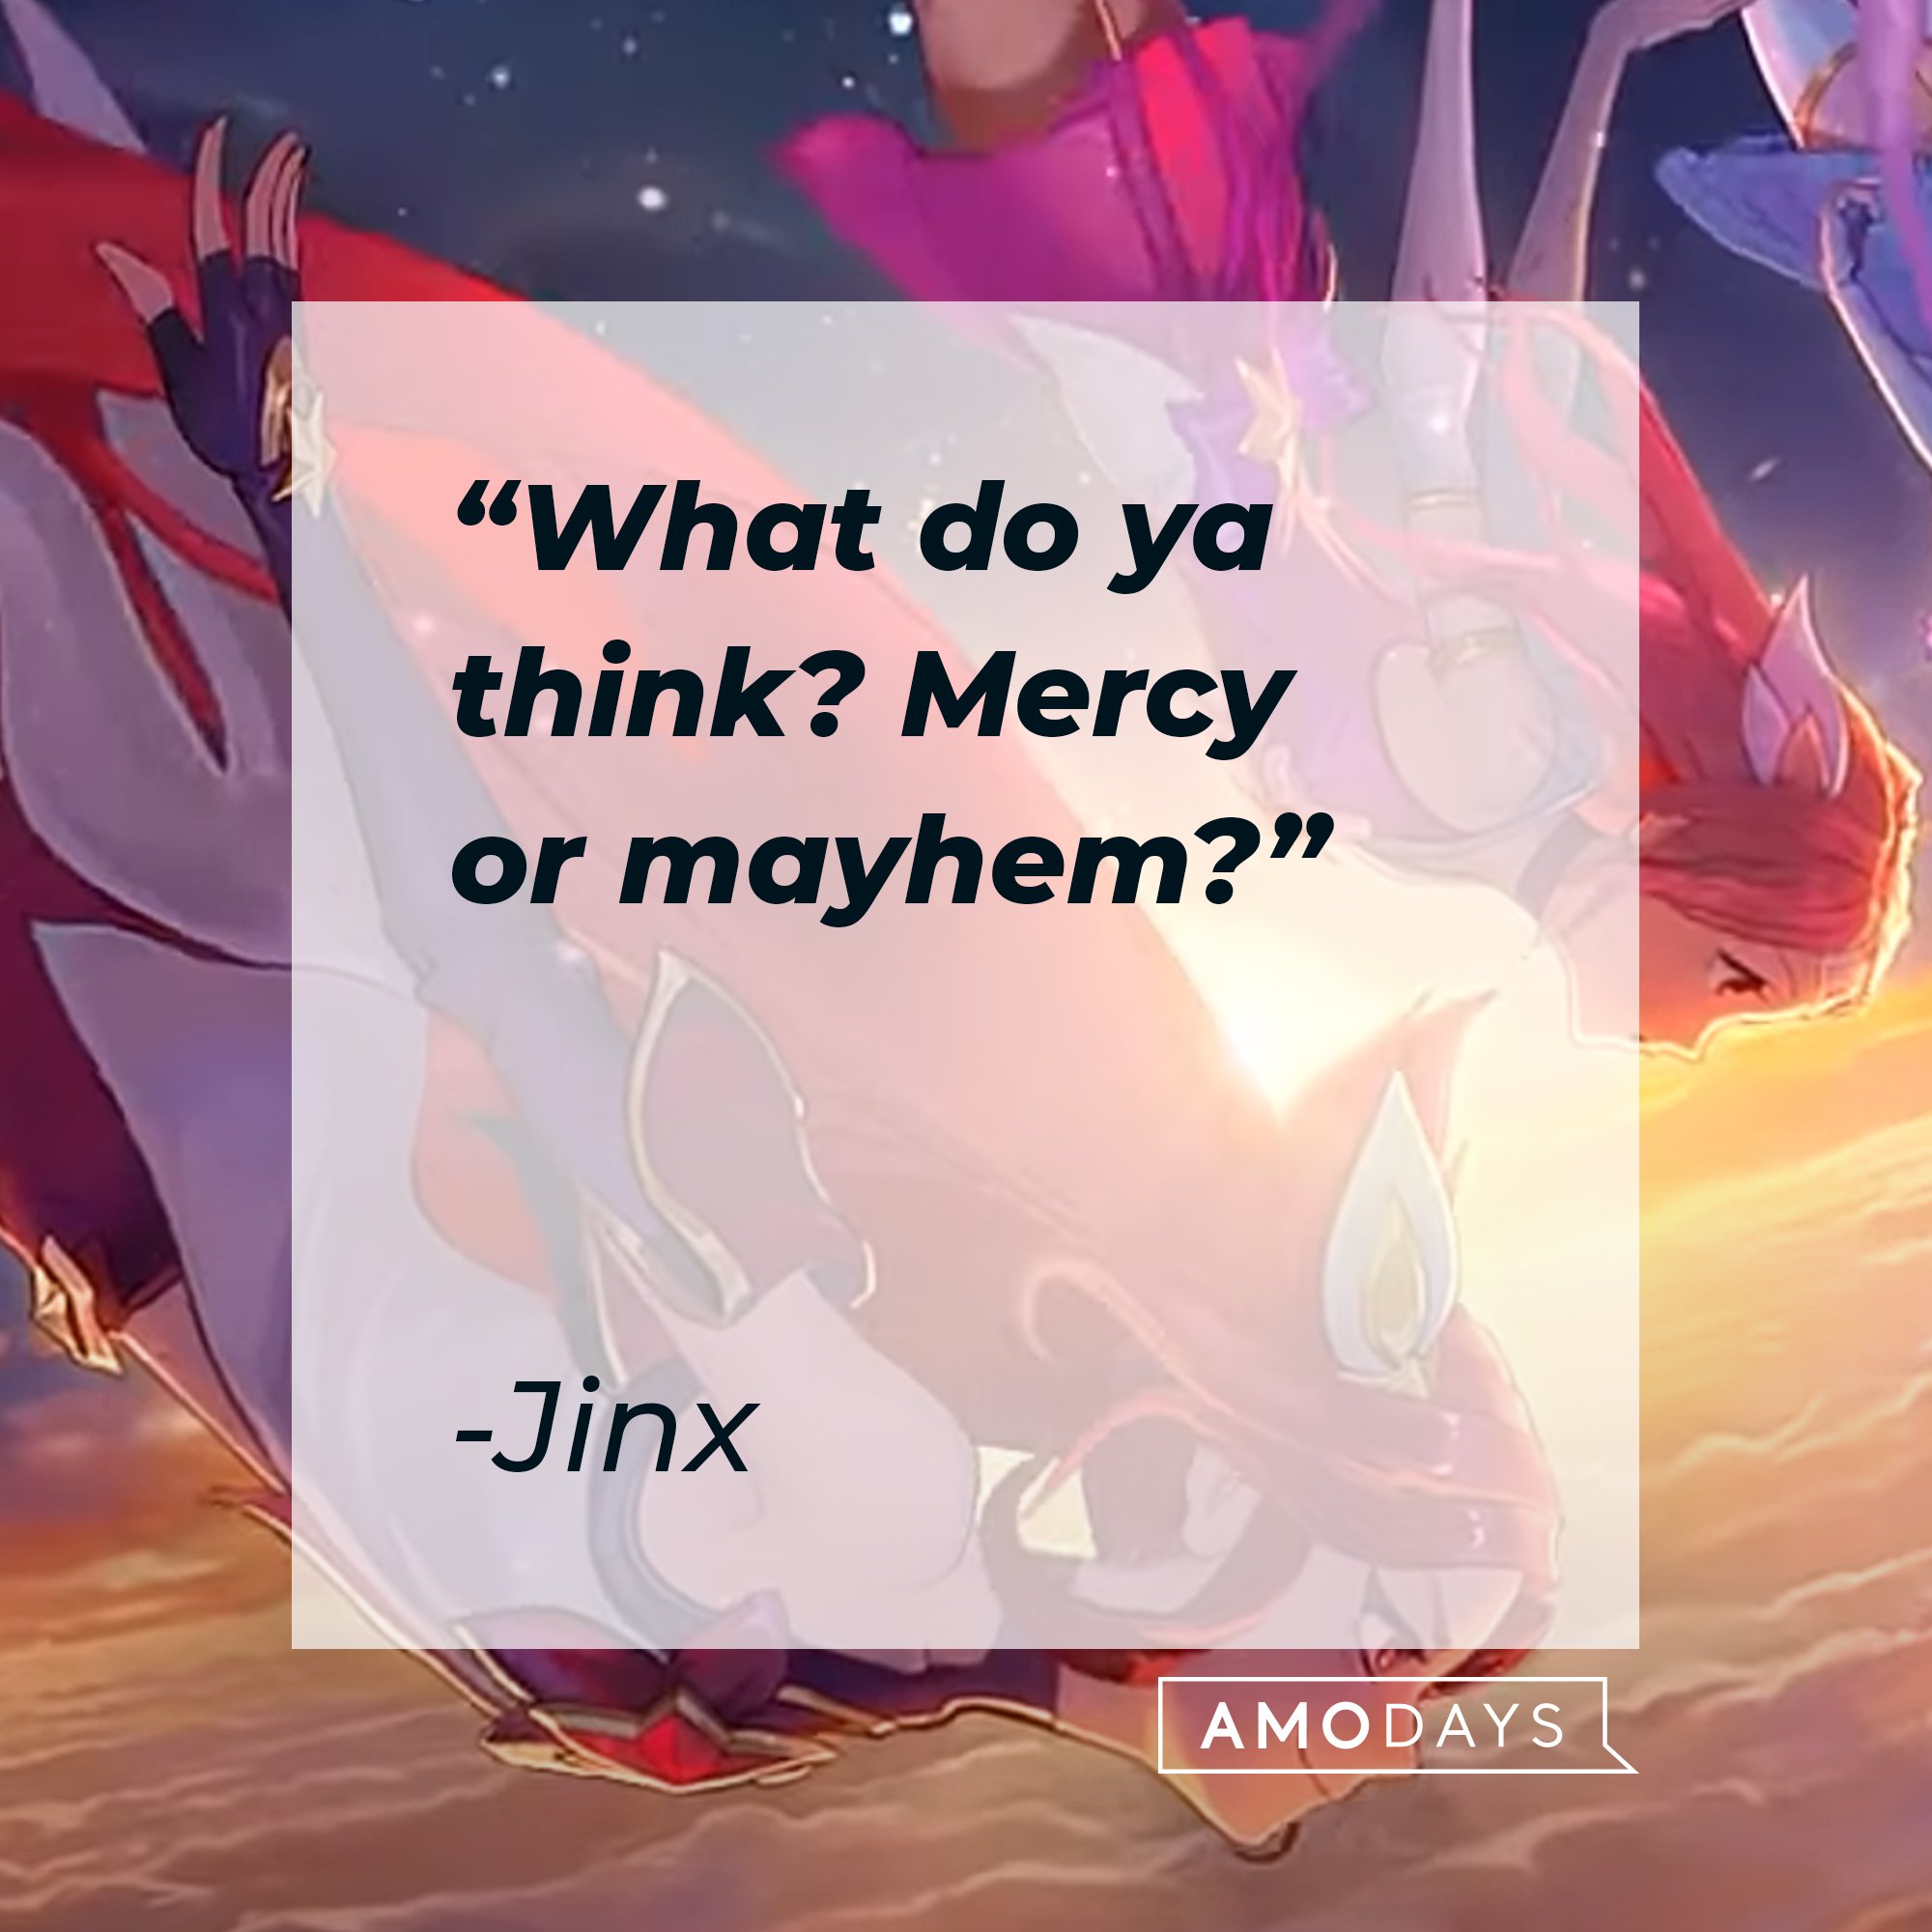 Jinx's quote: "What do ya think? Mercy or mayhem?" | Image: AmoDays